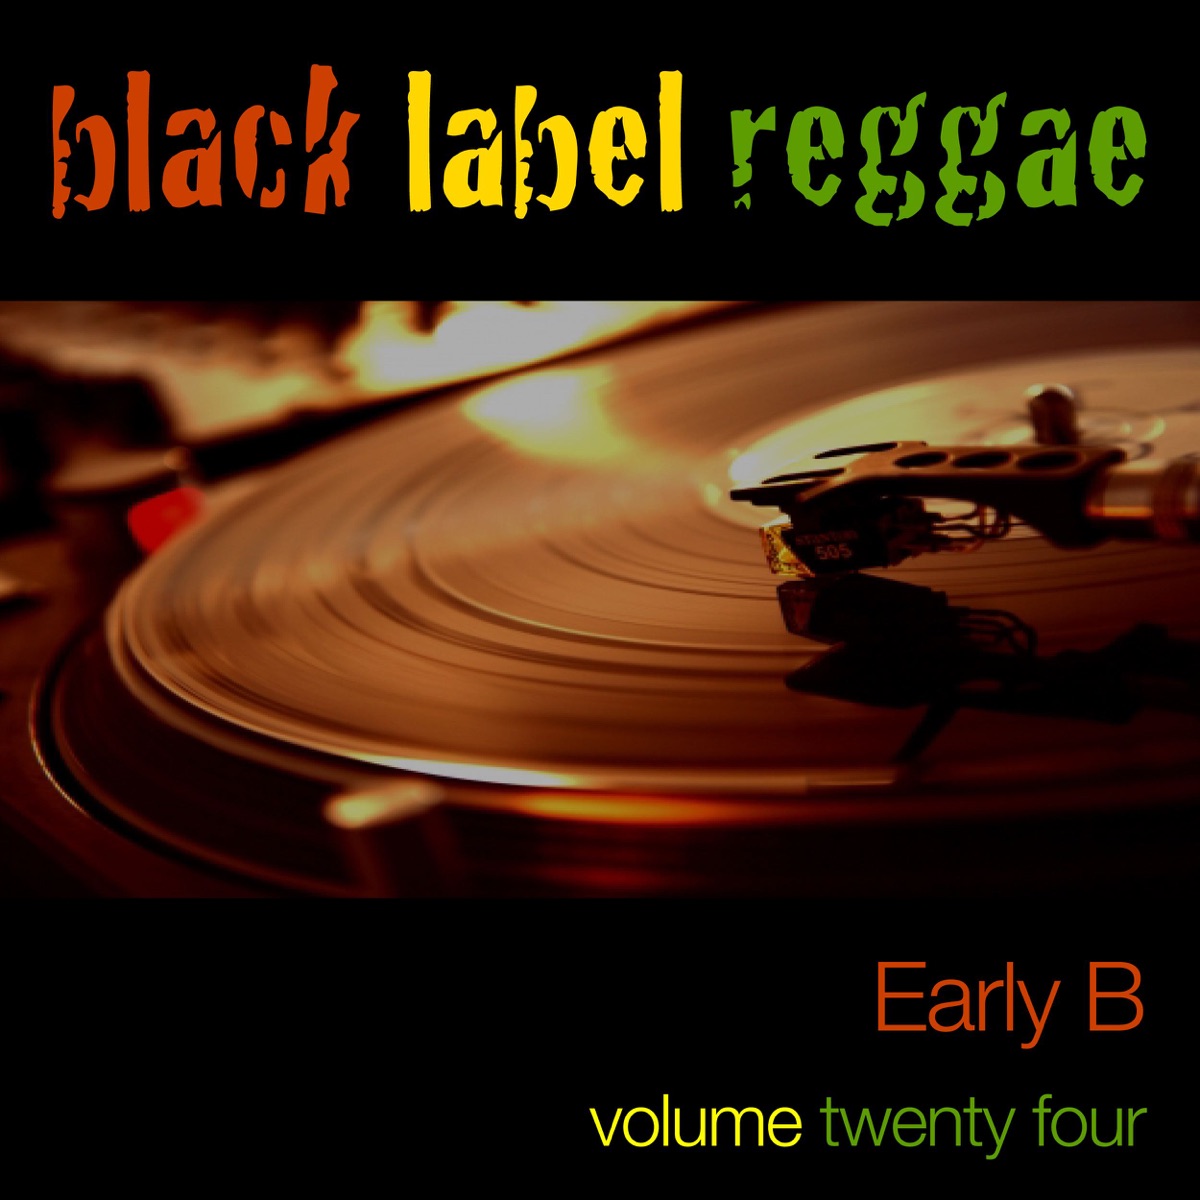 Early B Bible Story reggae レゲエレコード